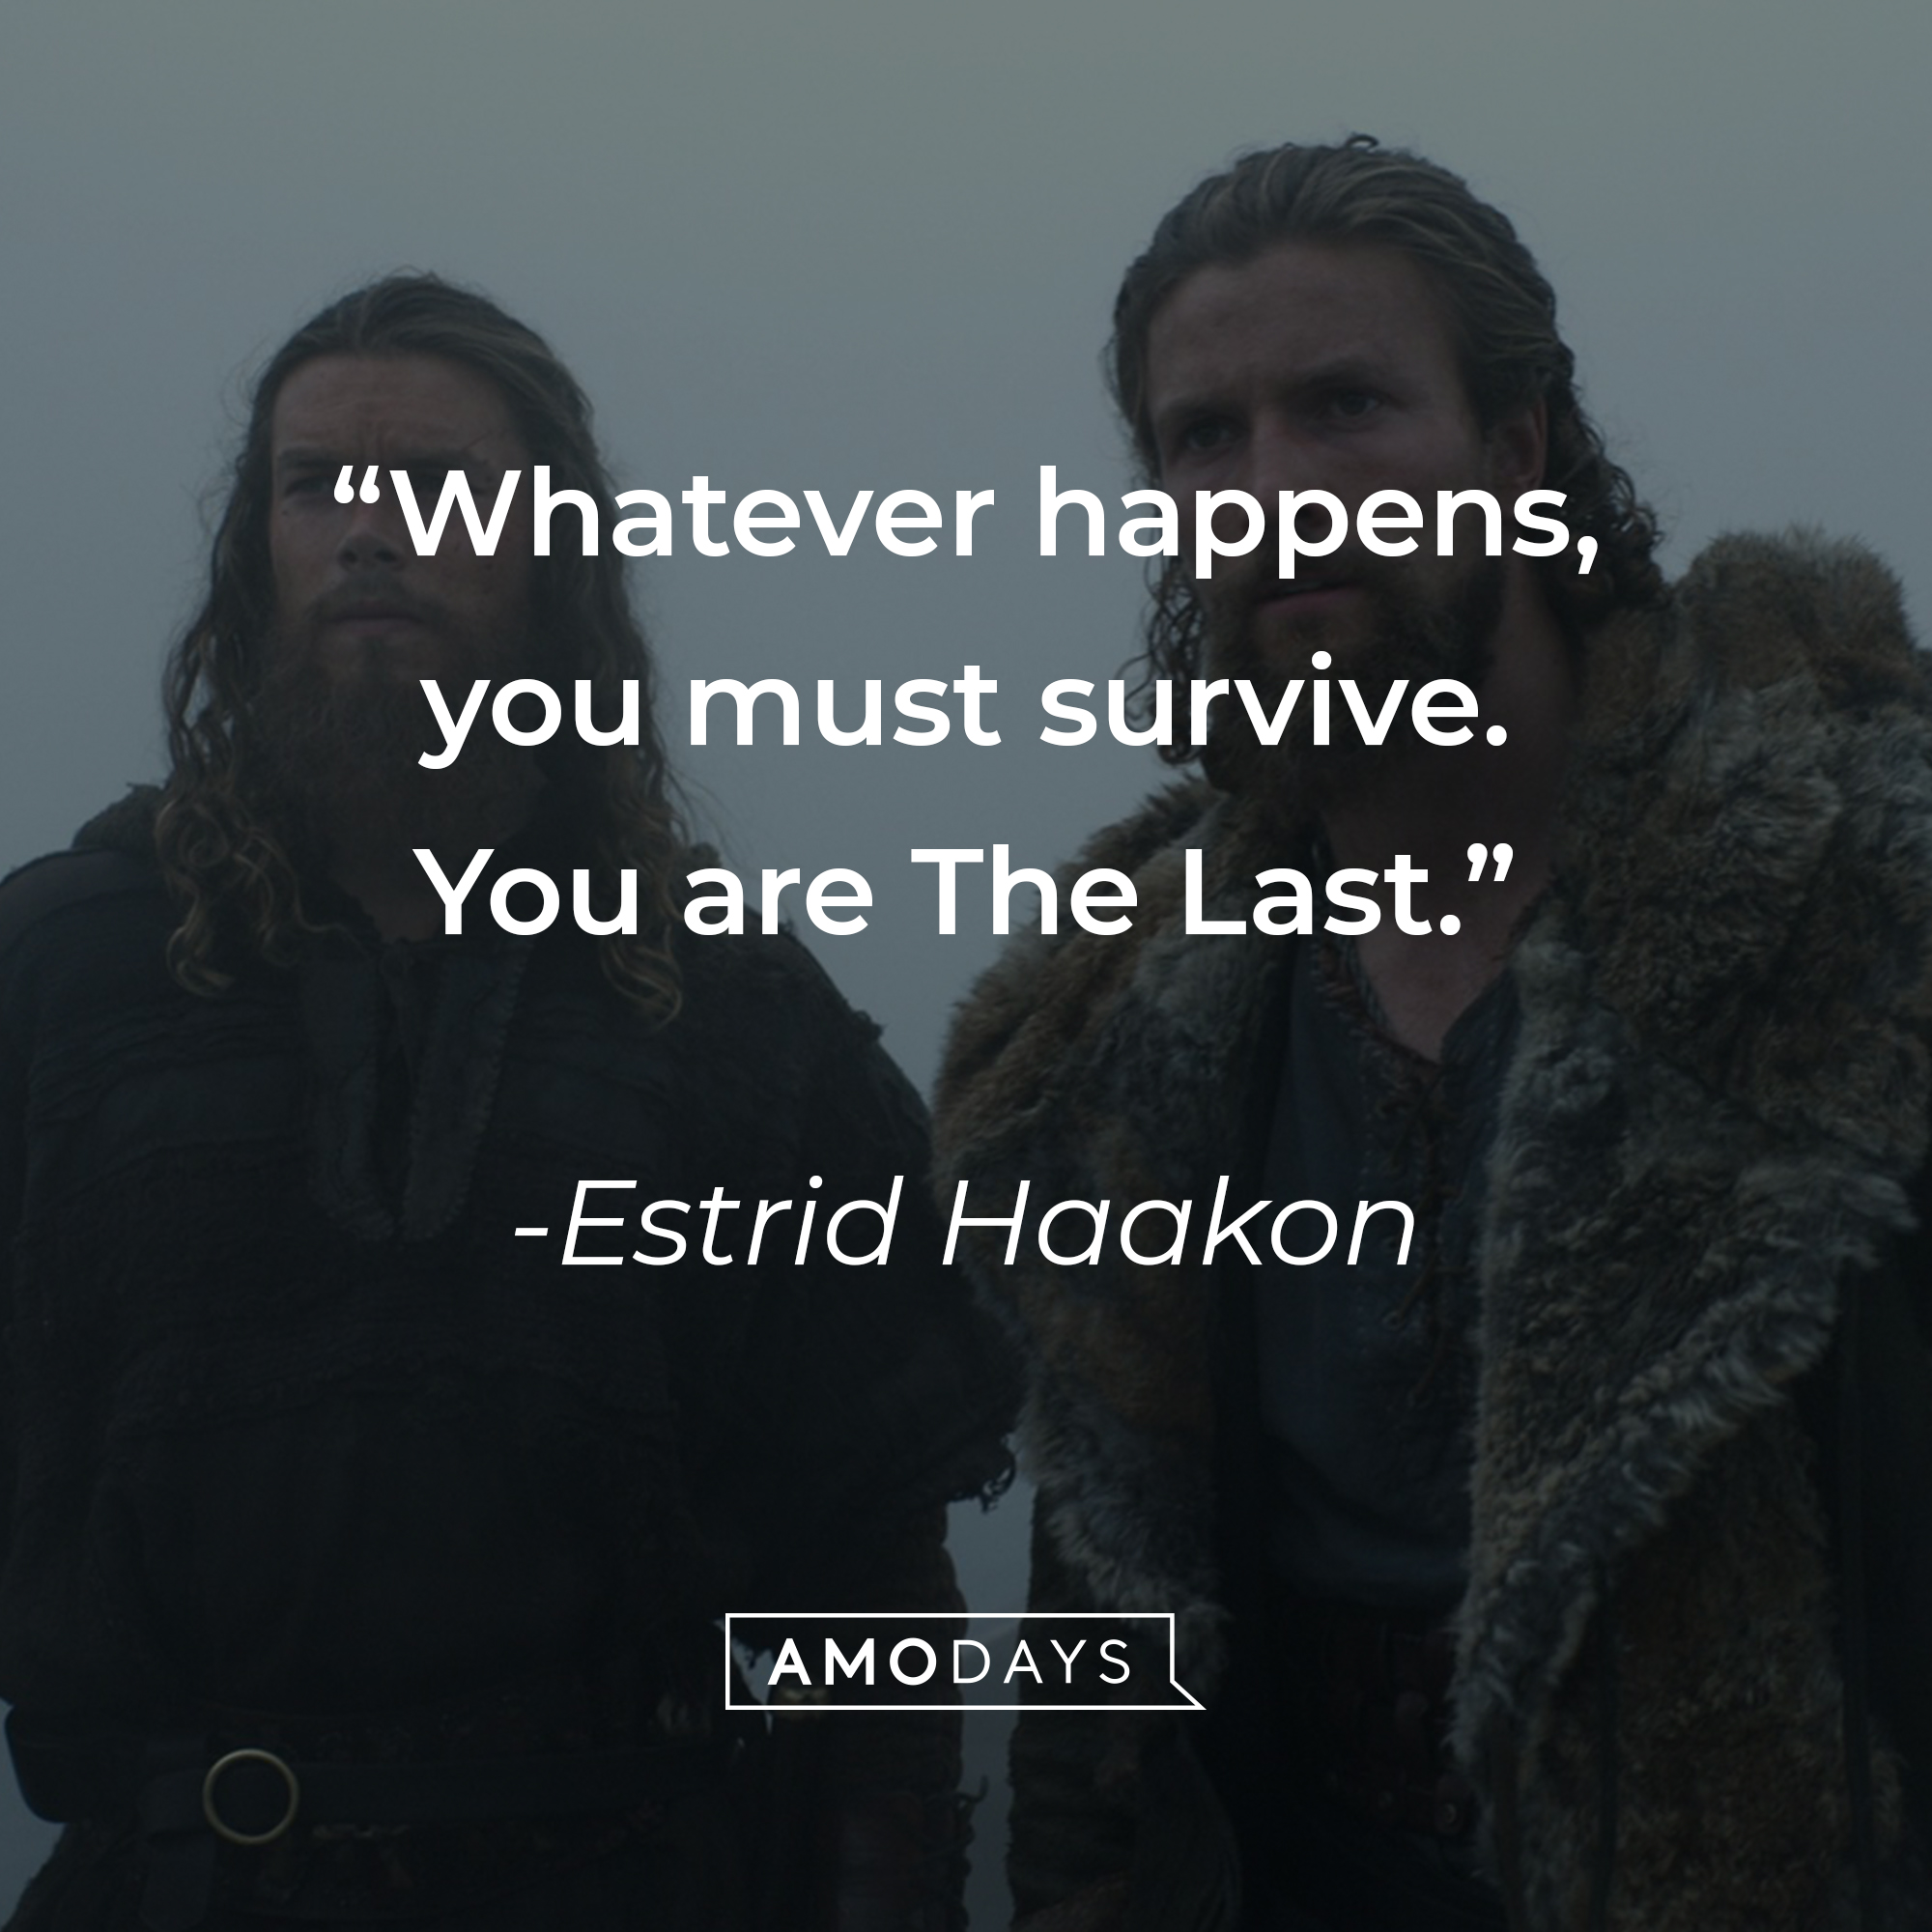 Estrid Haakon's quote: "Whatever happens, you must survive. You are The Last."┃Source: facebook.com/netflixvalhalla